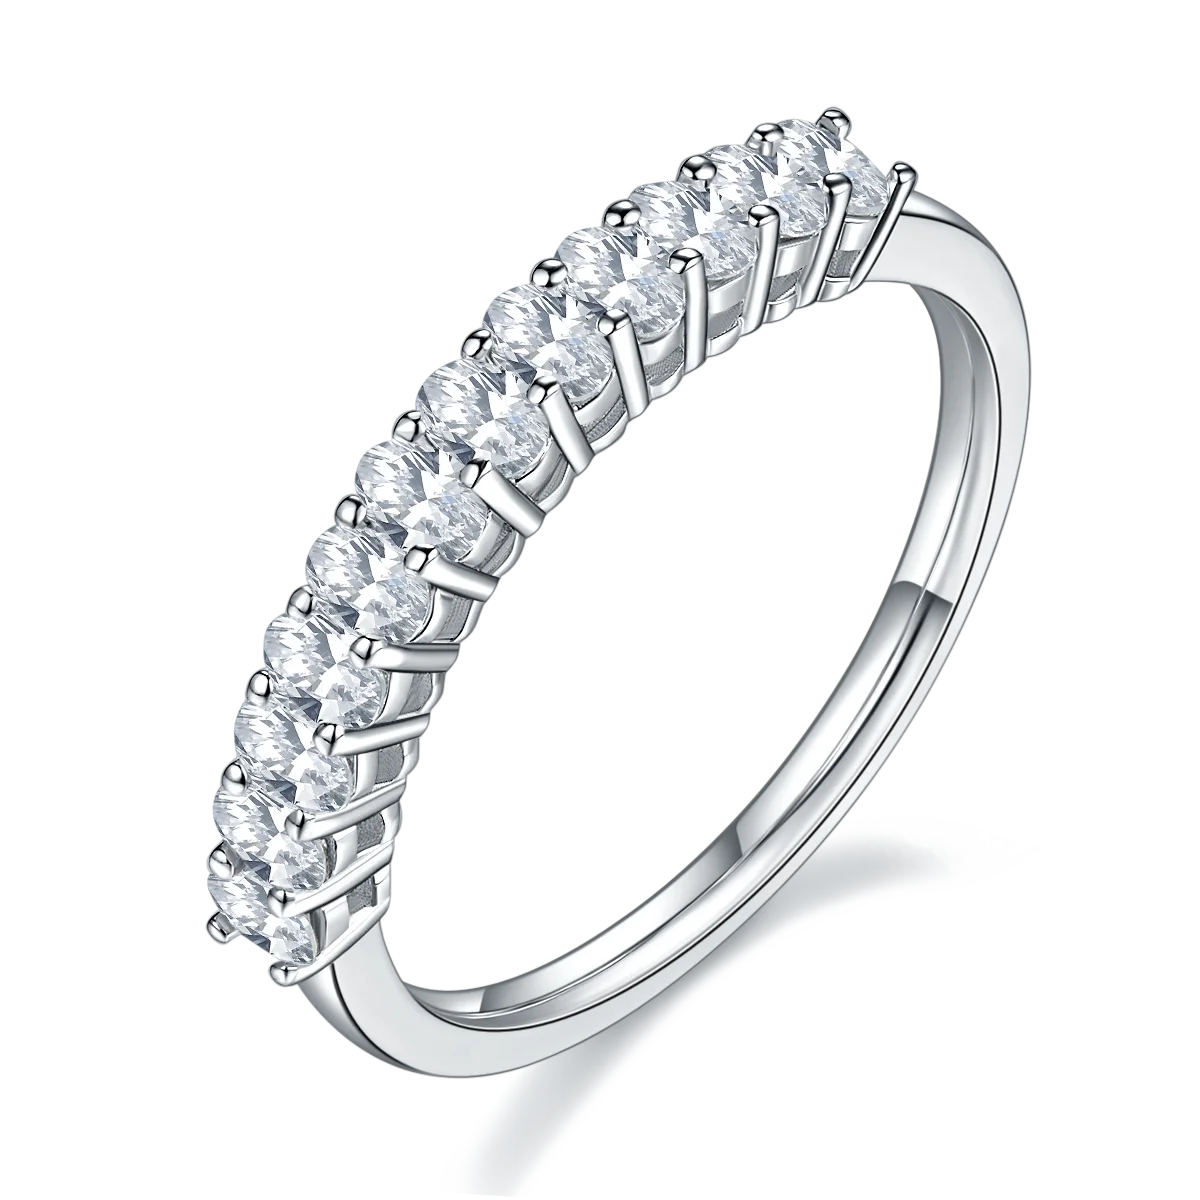 GEM'S BALLET 18K White Gold Plated 925 Sterling Silver Moissanite Ring Luxe Anthology Moissanite Diamond Wedding Band Rings 925 Sterling Silver Oval Shape